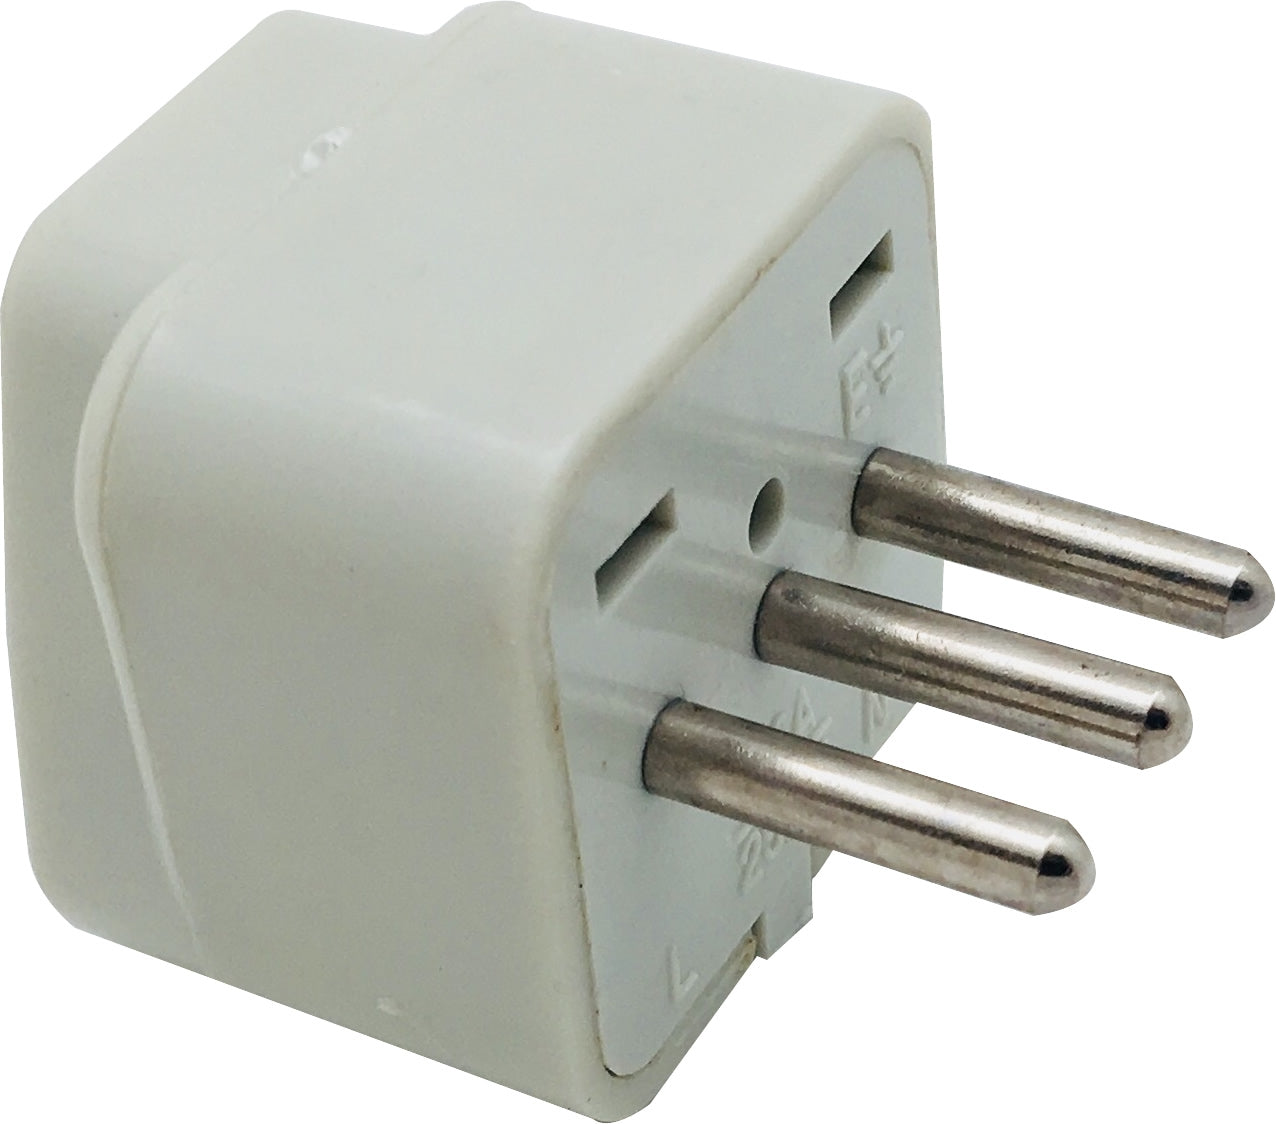 42-0332 Universal Power Plug Adapter:Round pins with ground